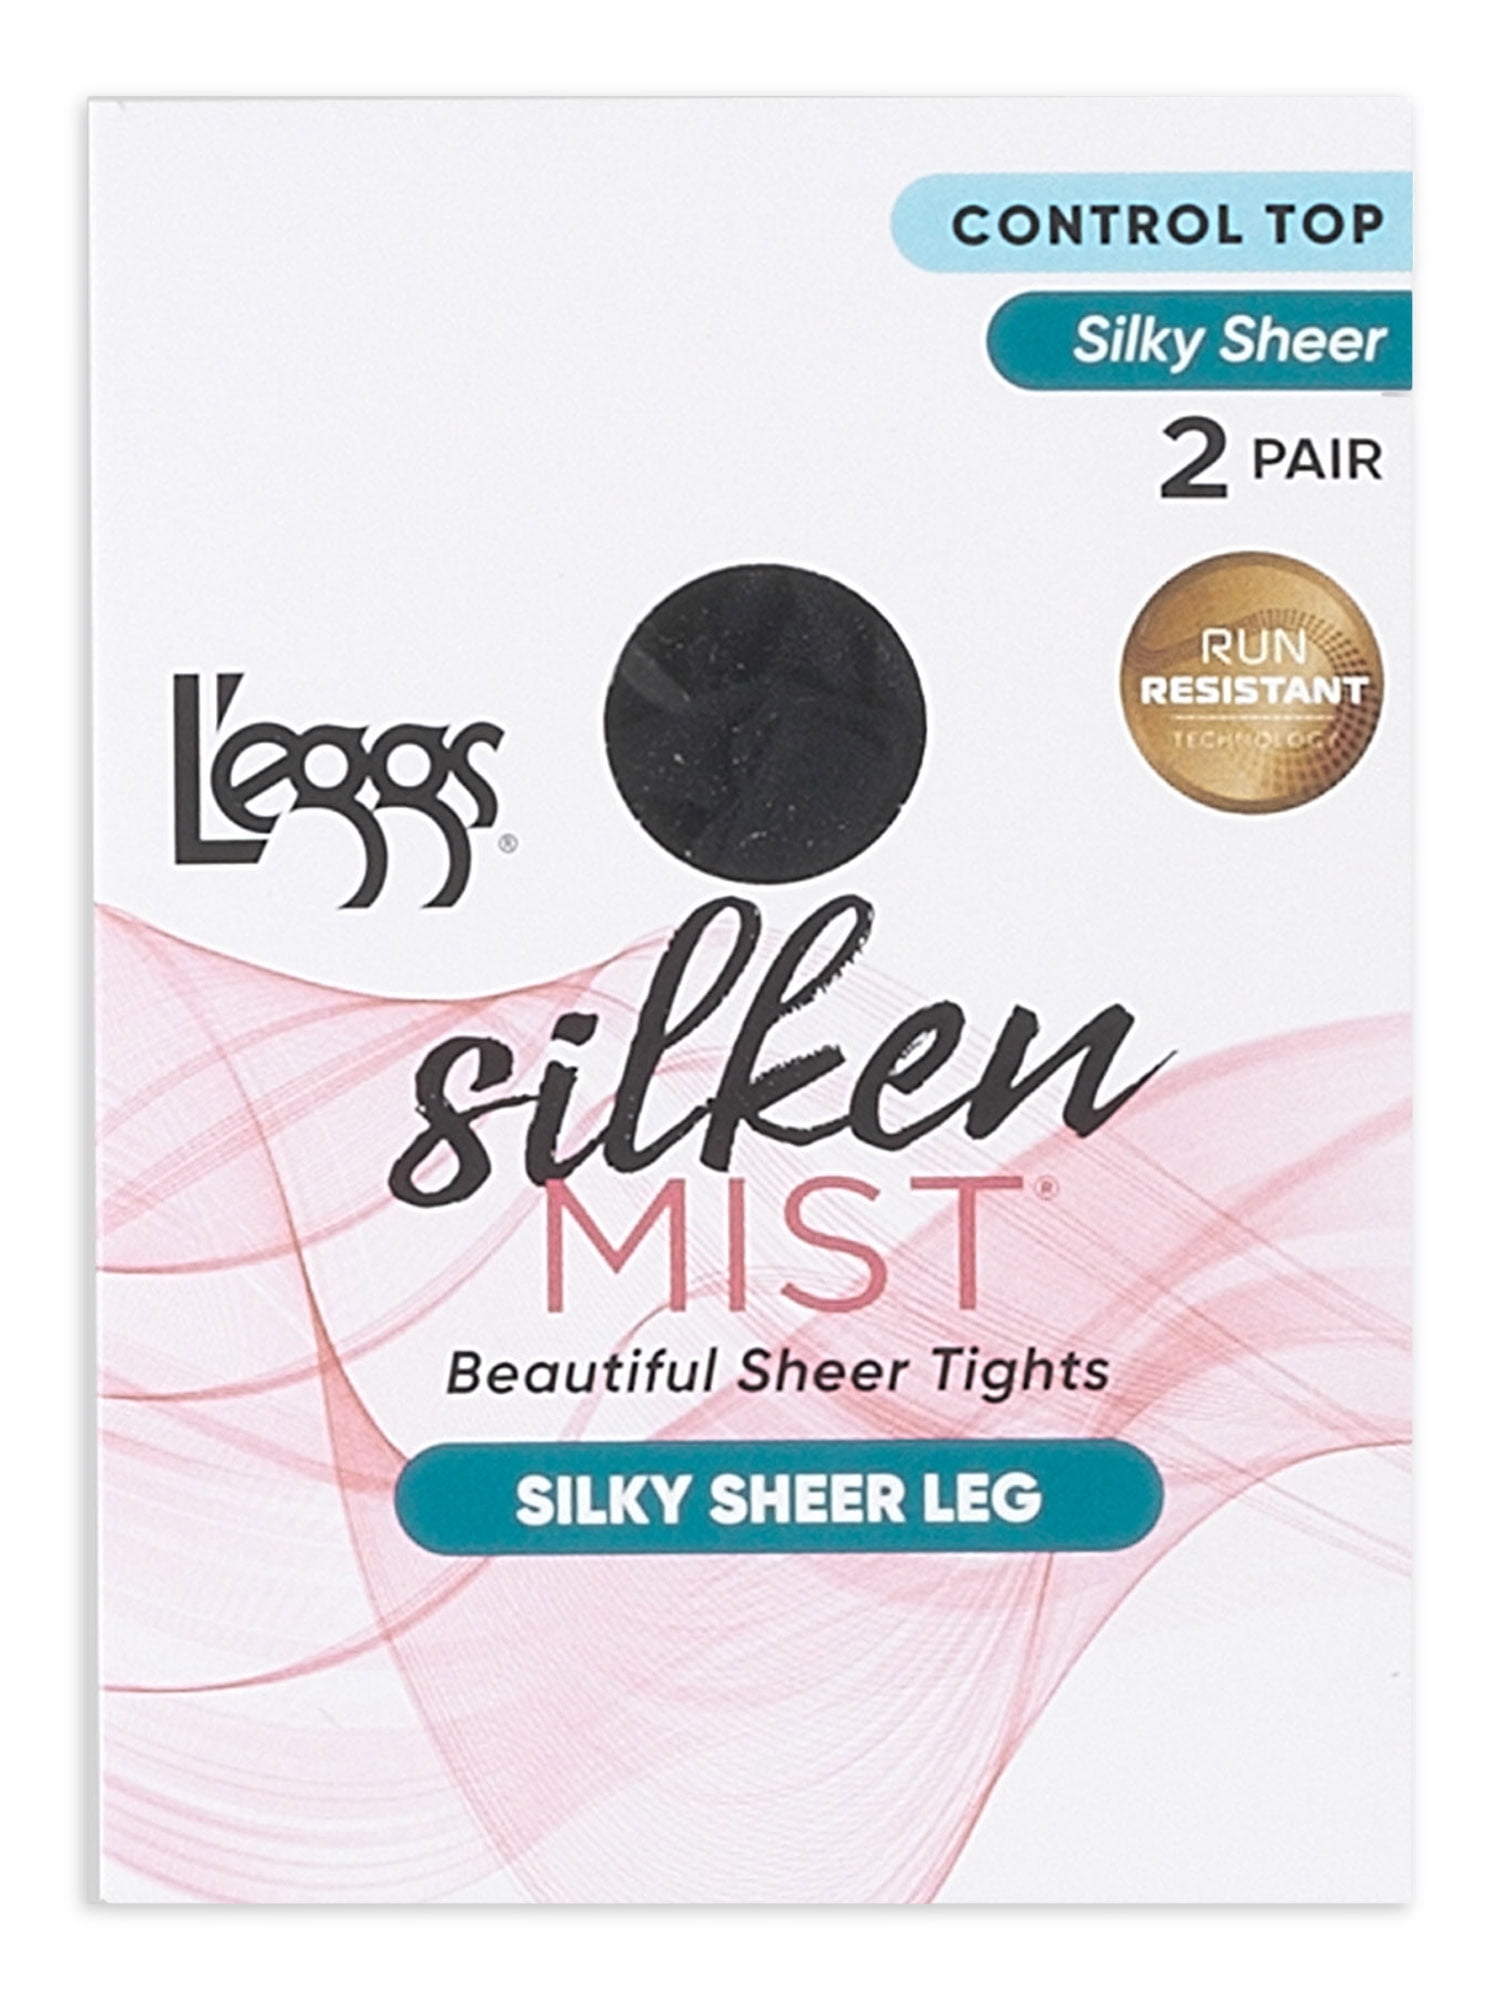 L'eggs Silken Mist Silky Sheer Leg Control Top Run Resistant Sheer